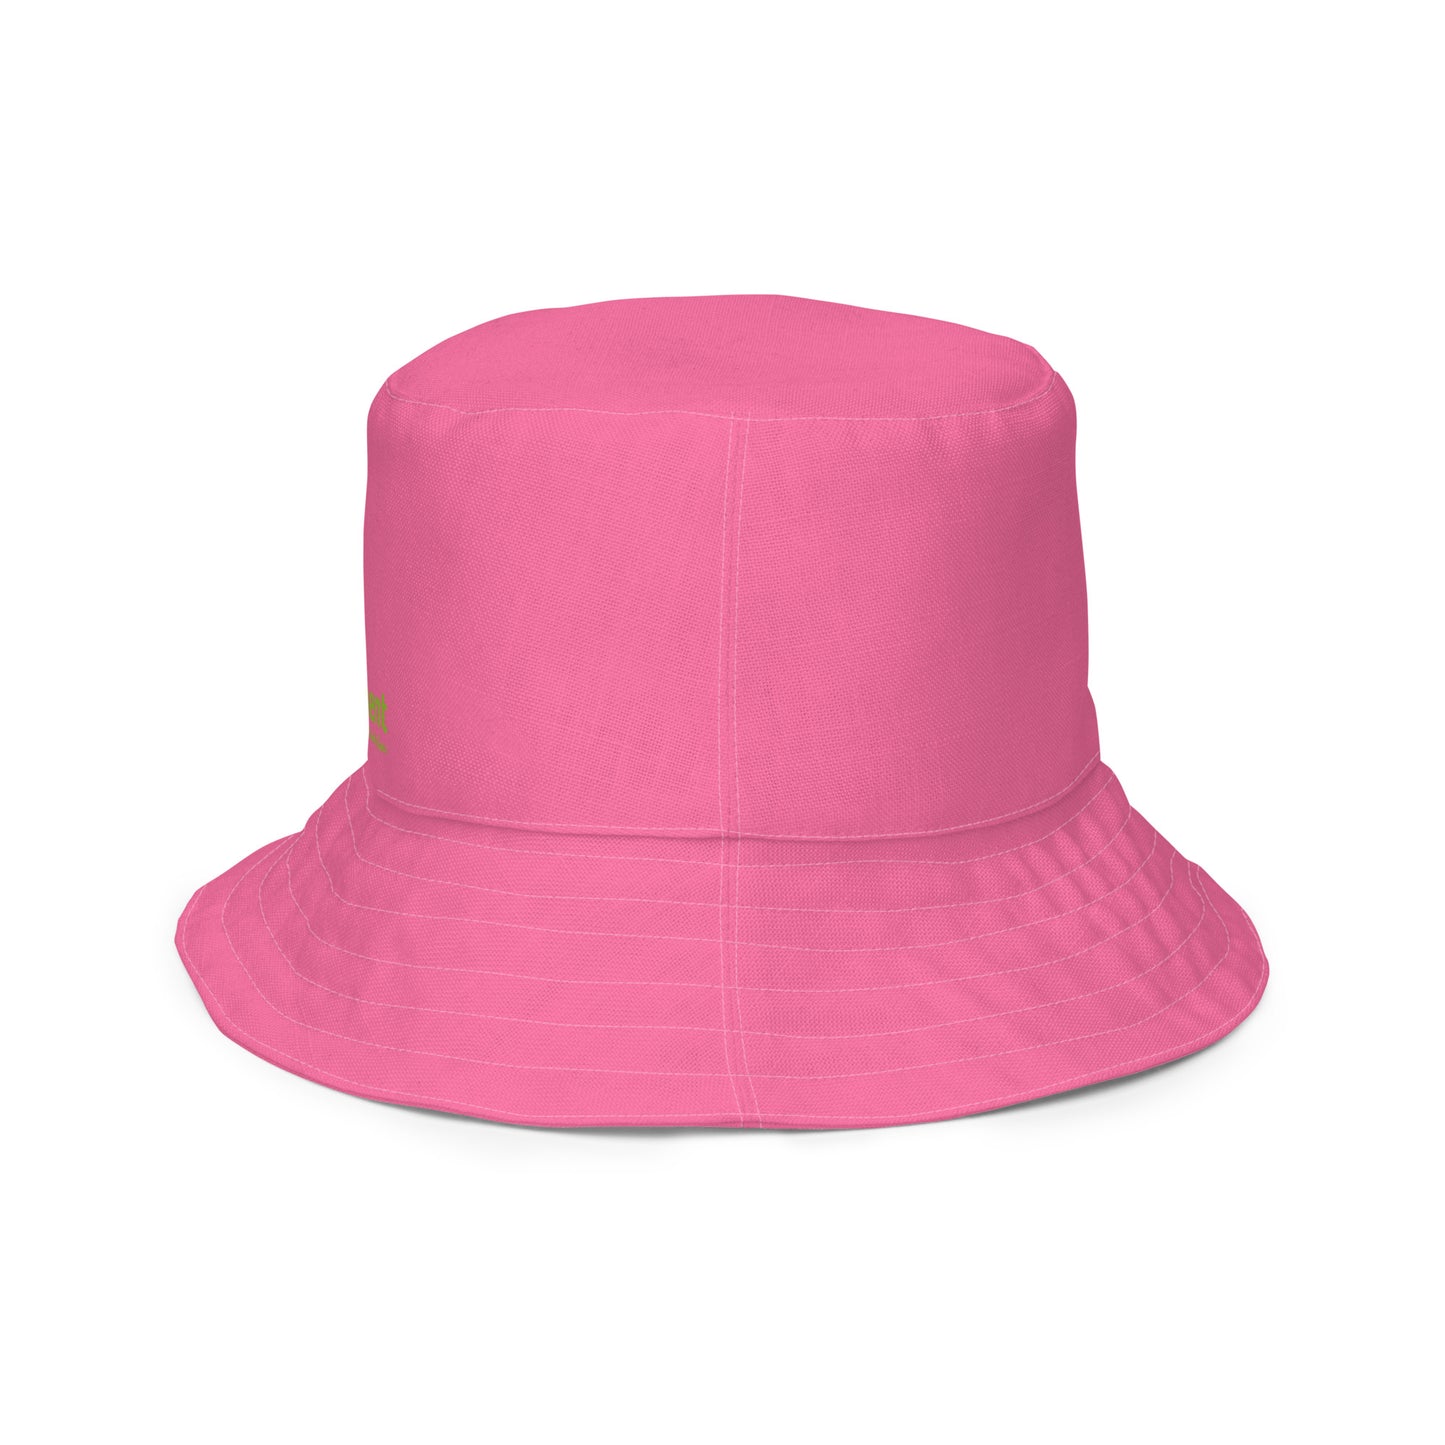 The FLOWER LOVE Collection - "Wildflower Wonder" Design Premium Reversible Bucket Hat - Pink Inside - Wildflower Hat, Gifts for Her